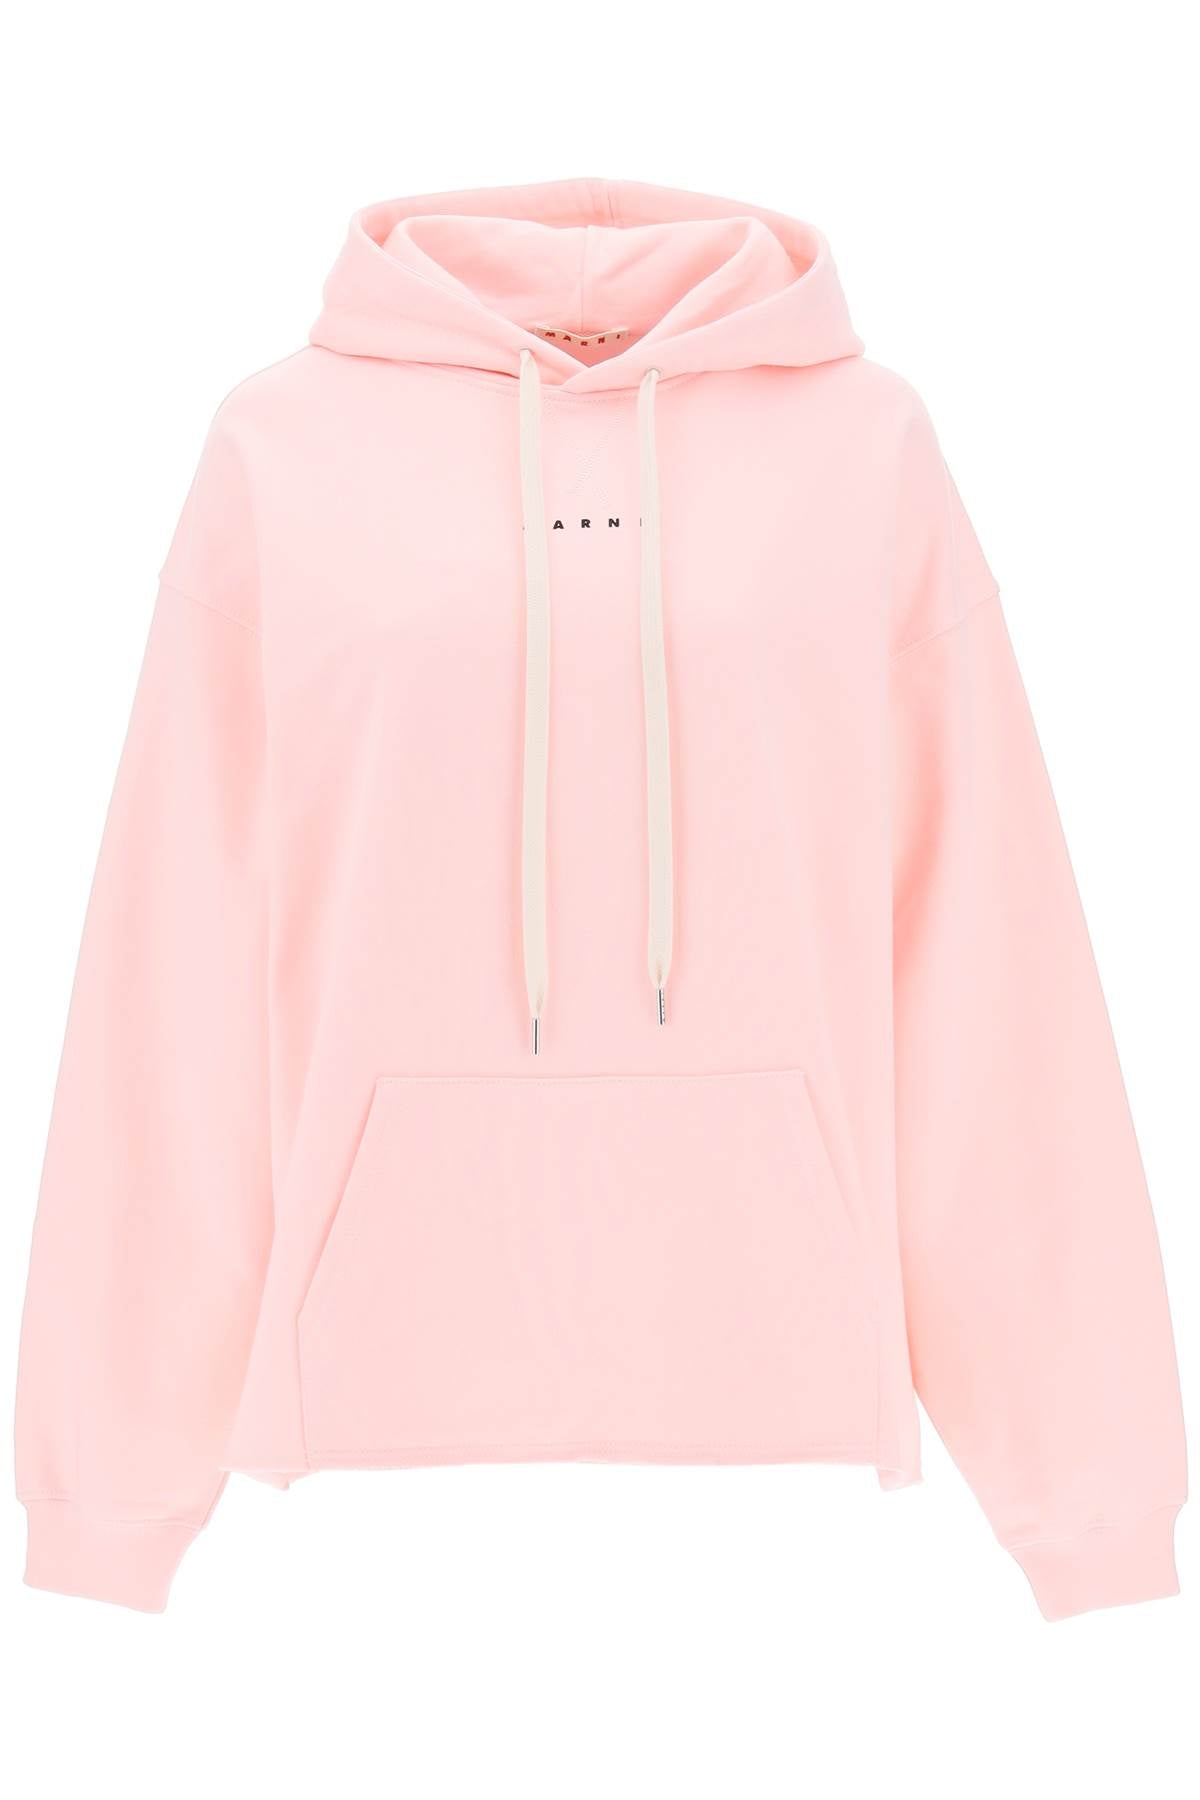 Marni hoodie with logo print-0